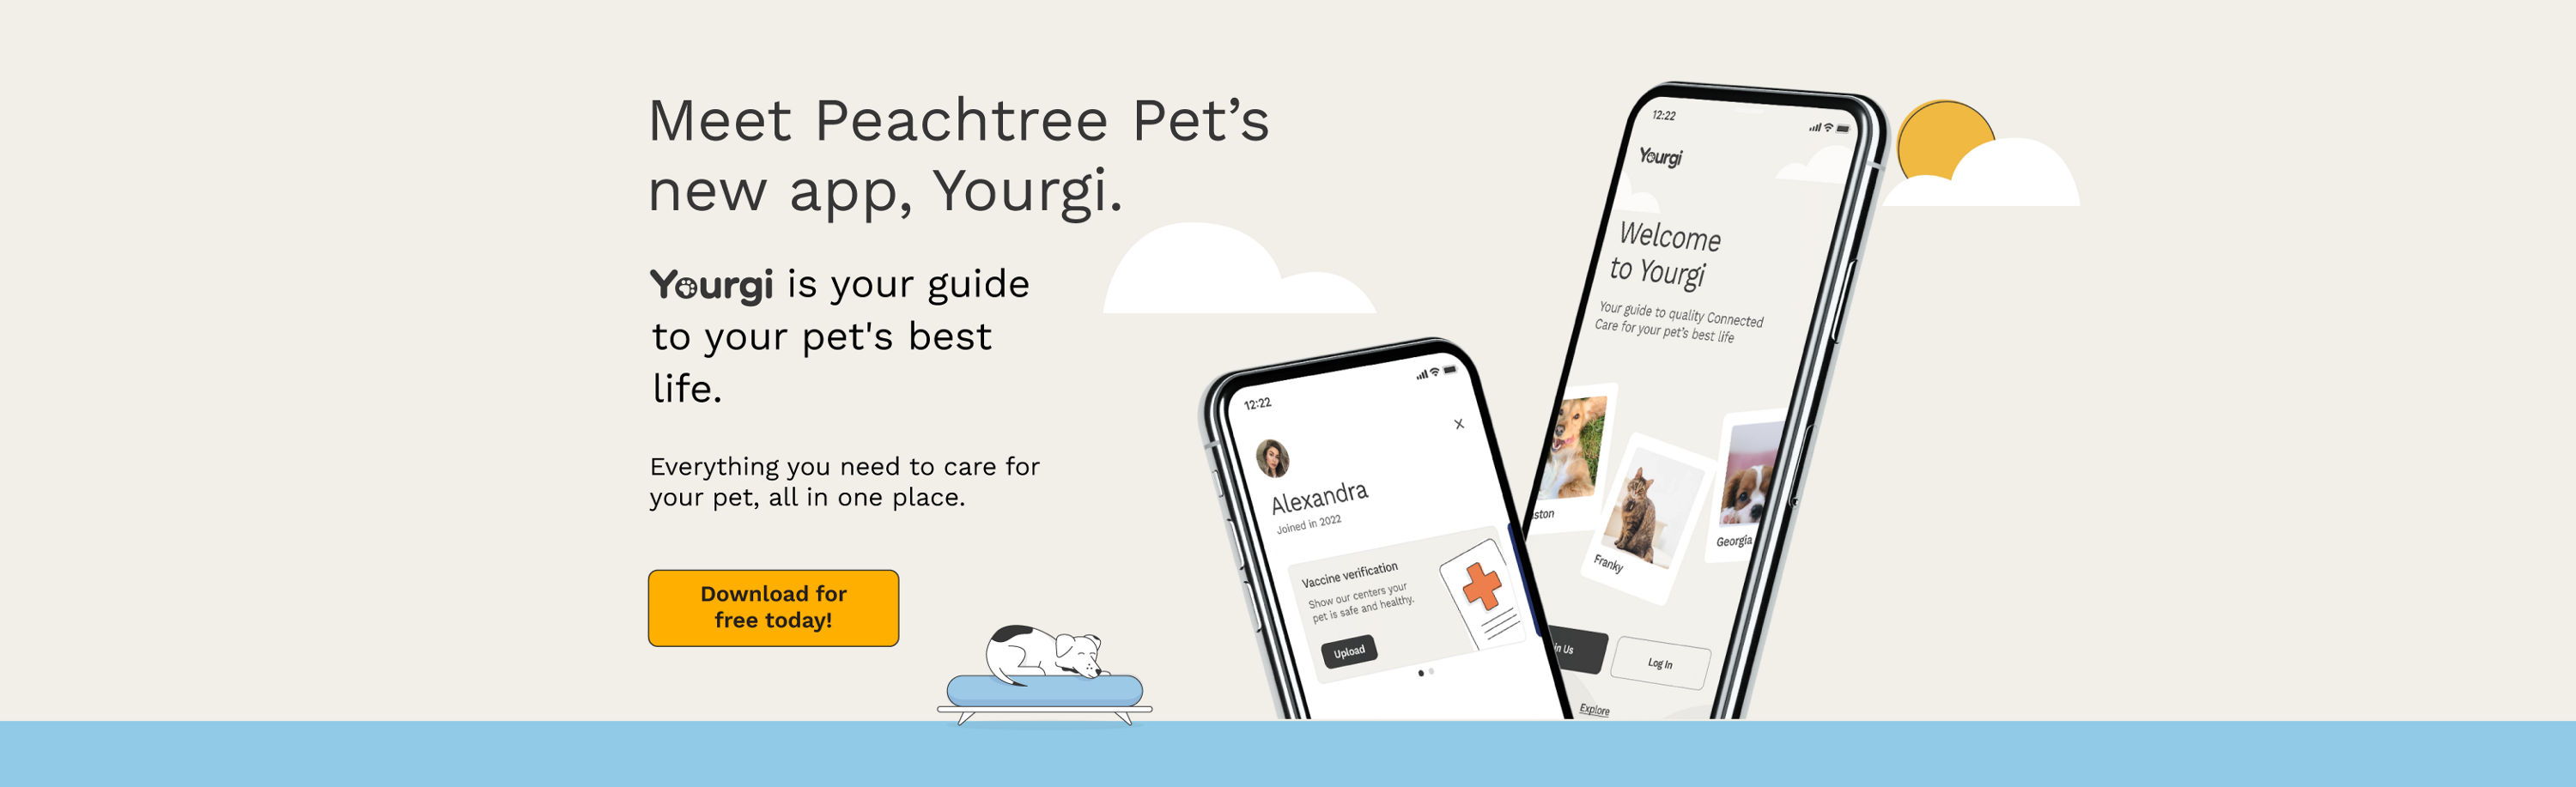 Meet Peachtree Pet's new app, Yourgi.